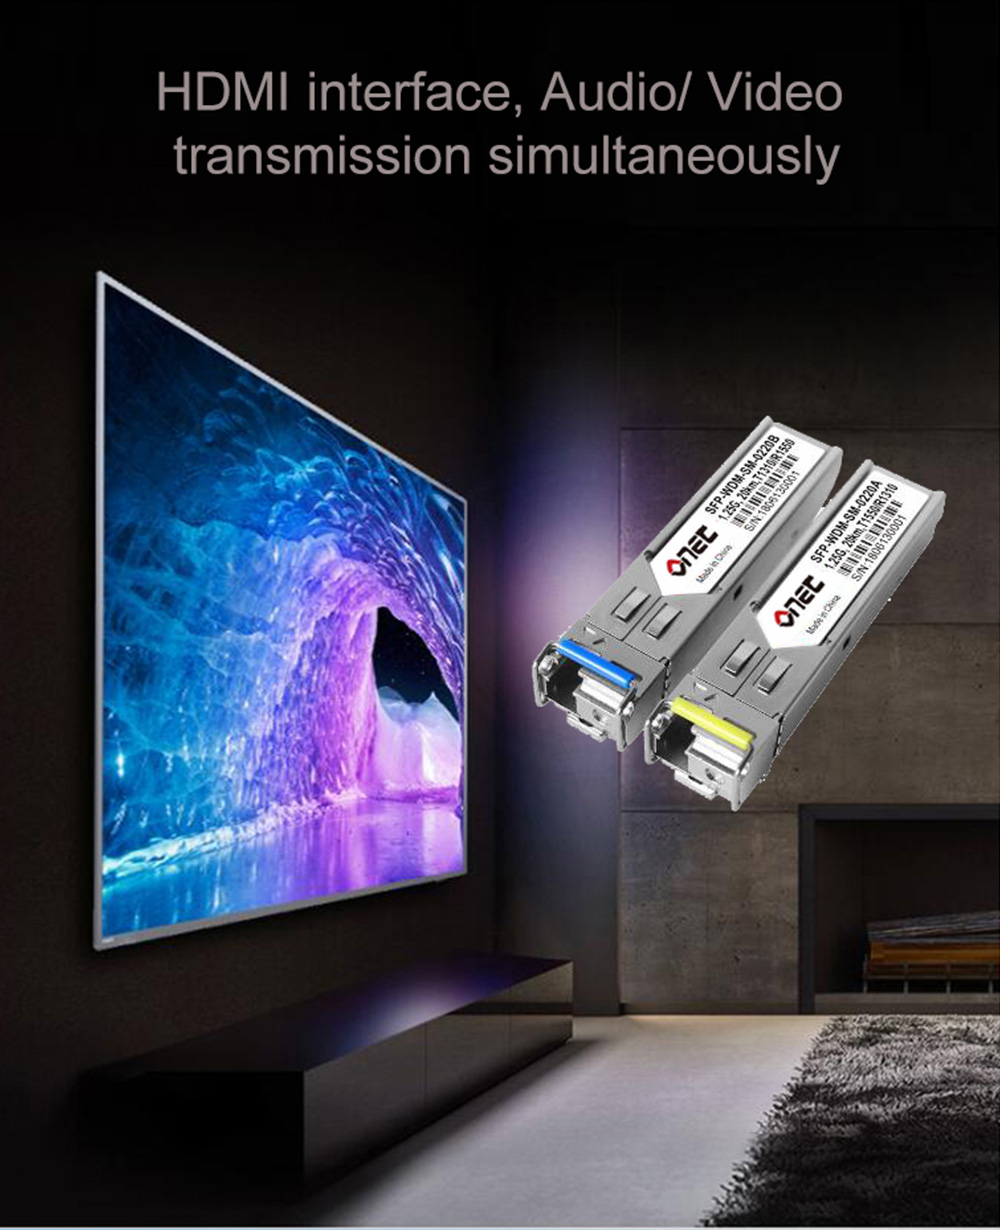 Measy OPT882 20km Optical Fiber Extender 1080P HD Analog Audio Video Transmitter Receiver EU Plug - Black / Orange